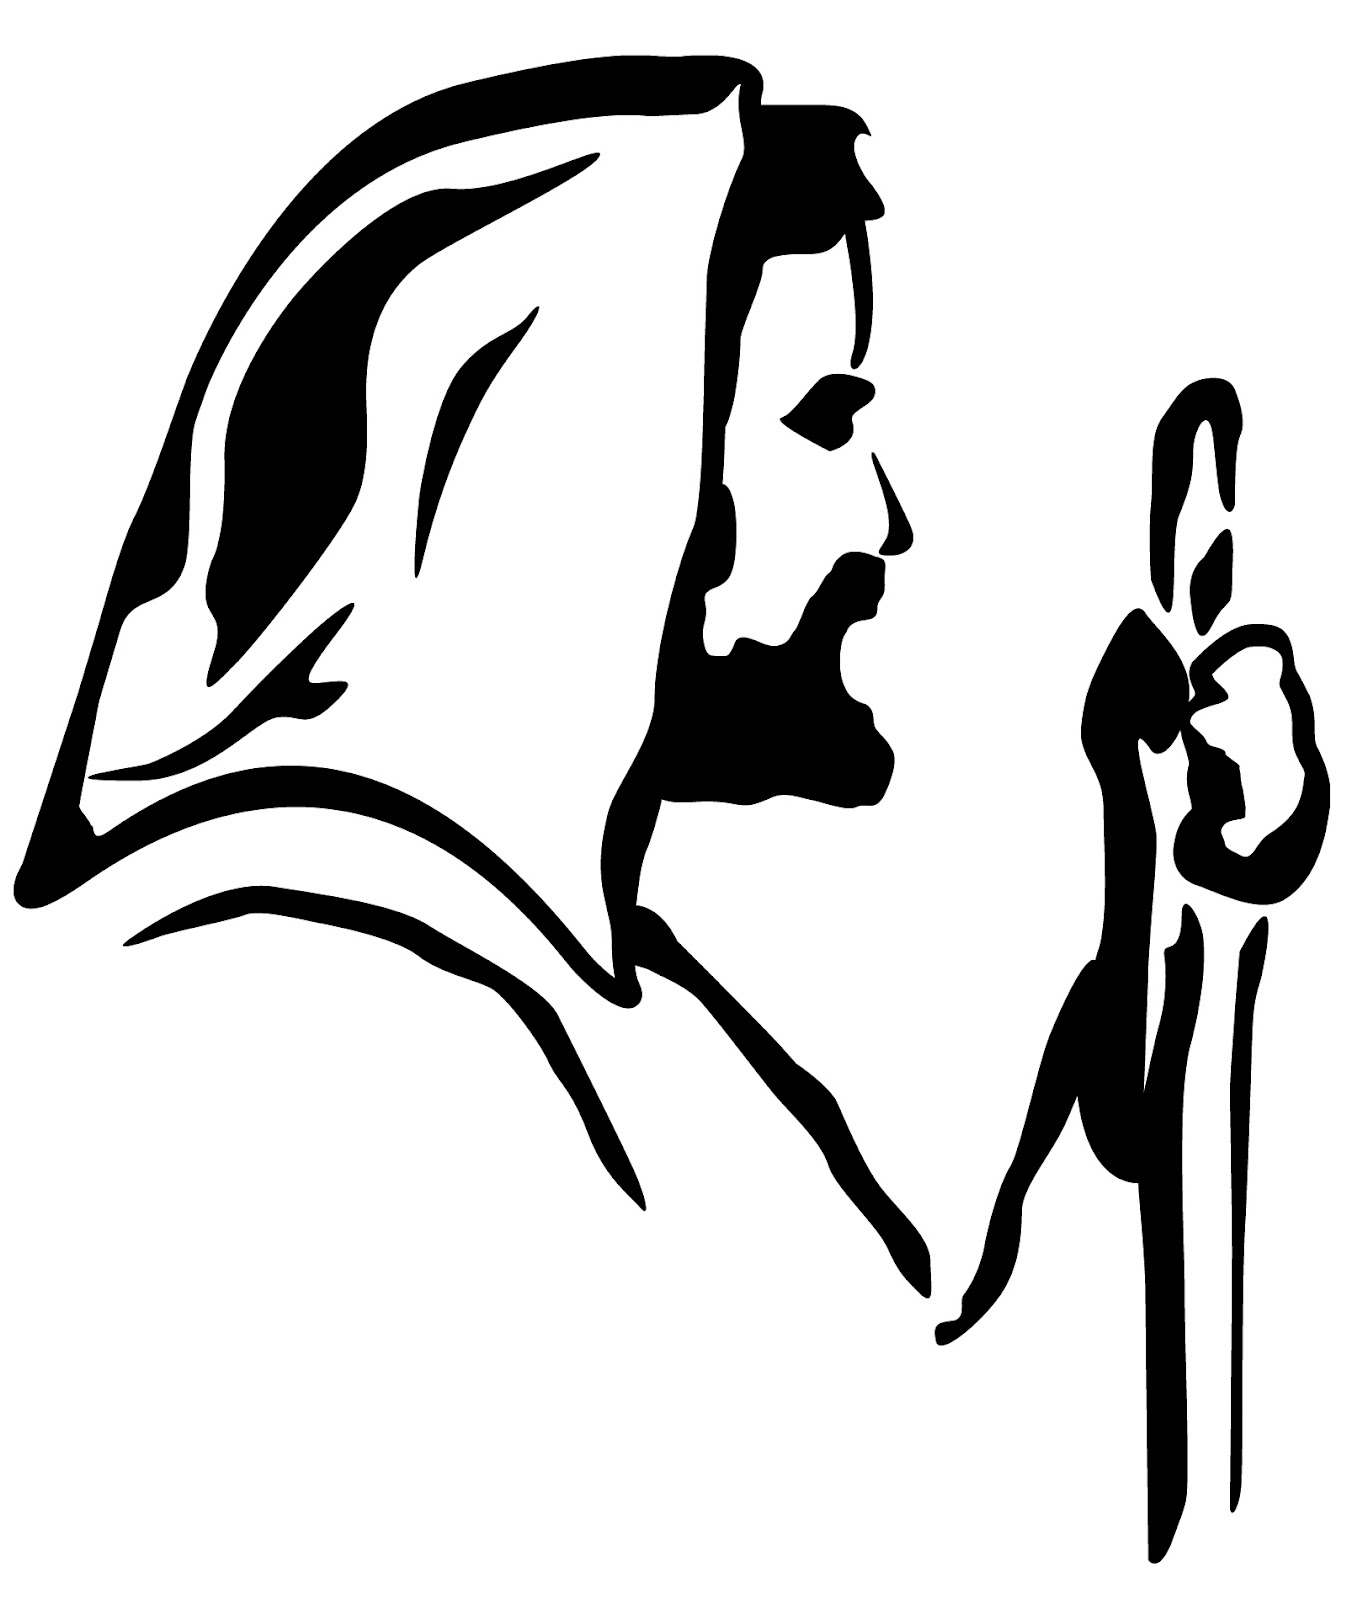 jesus christ silhouette side view